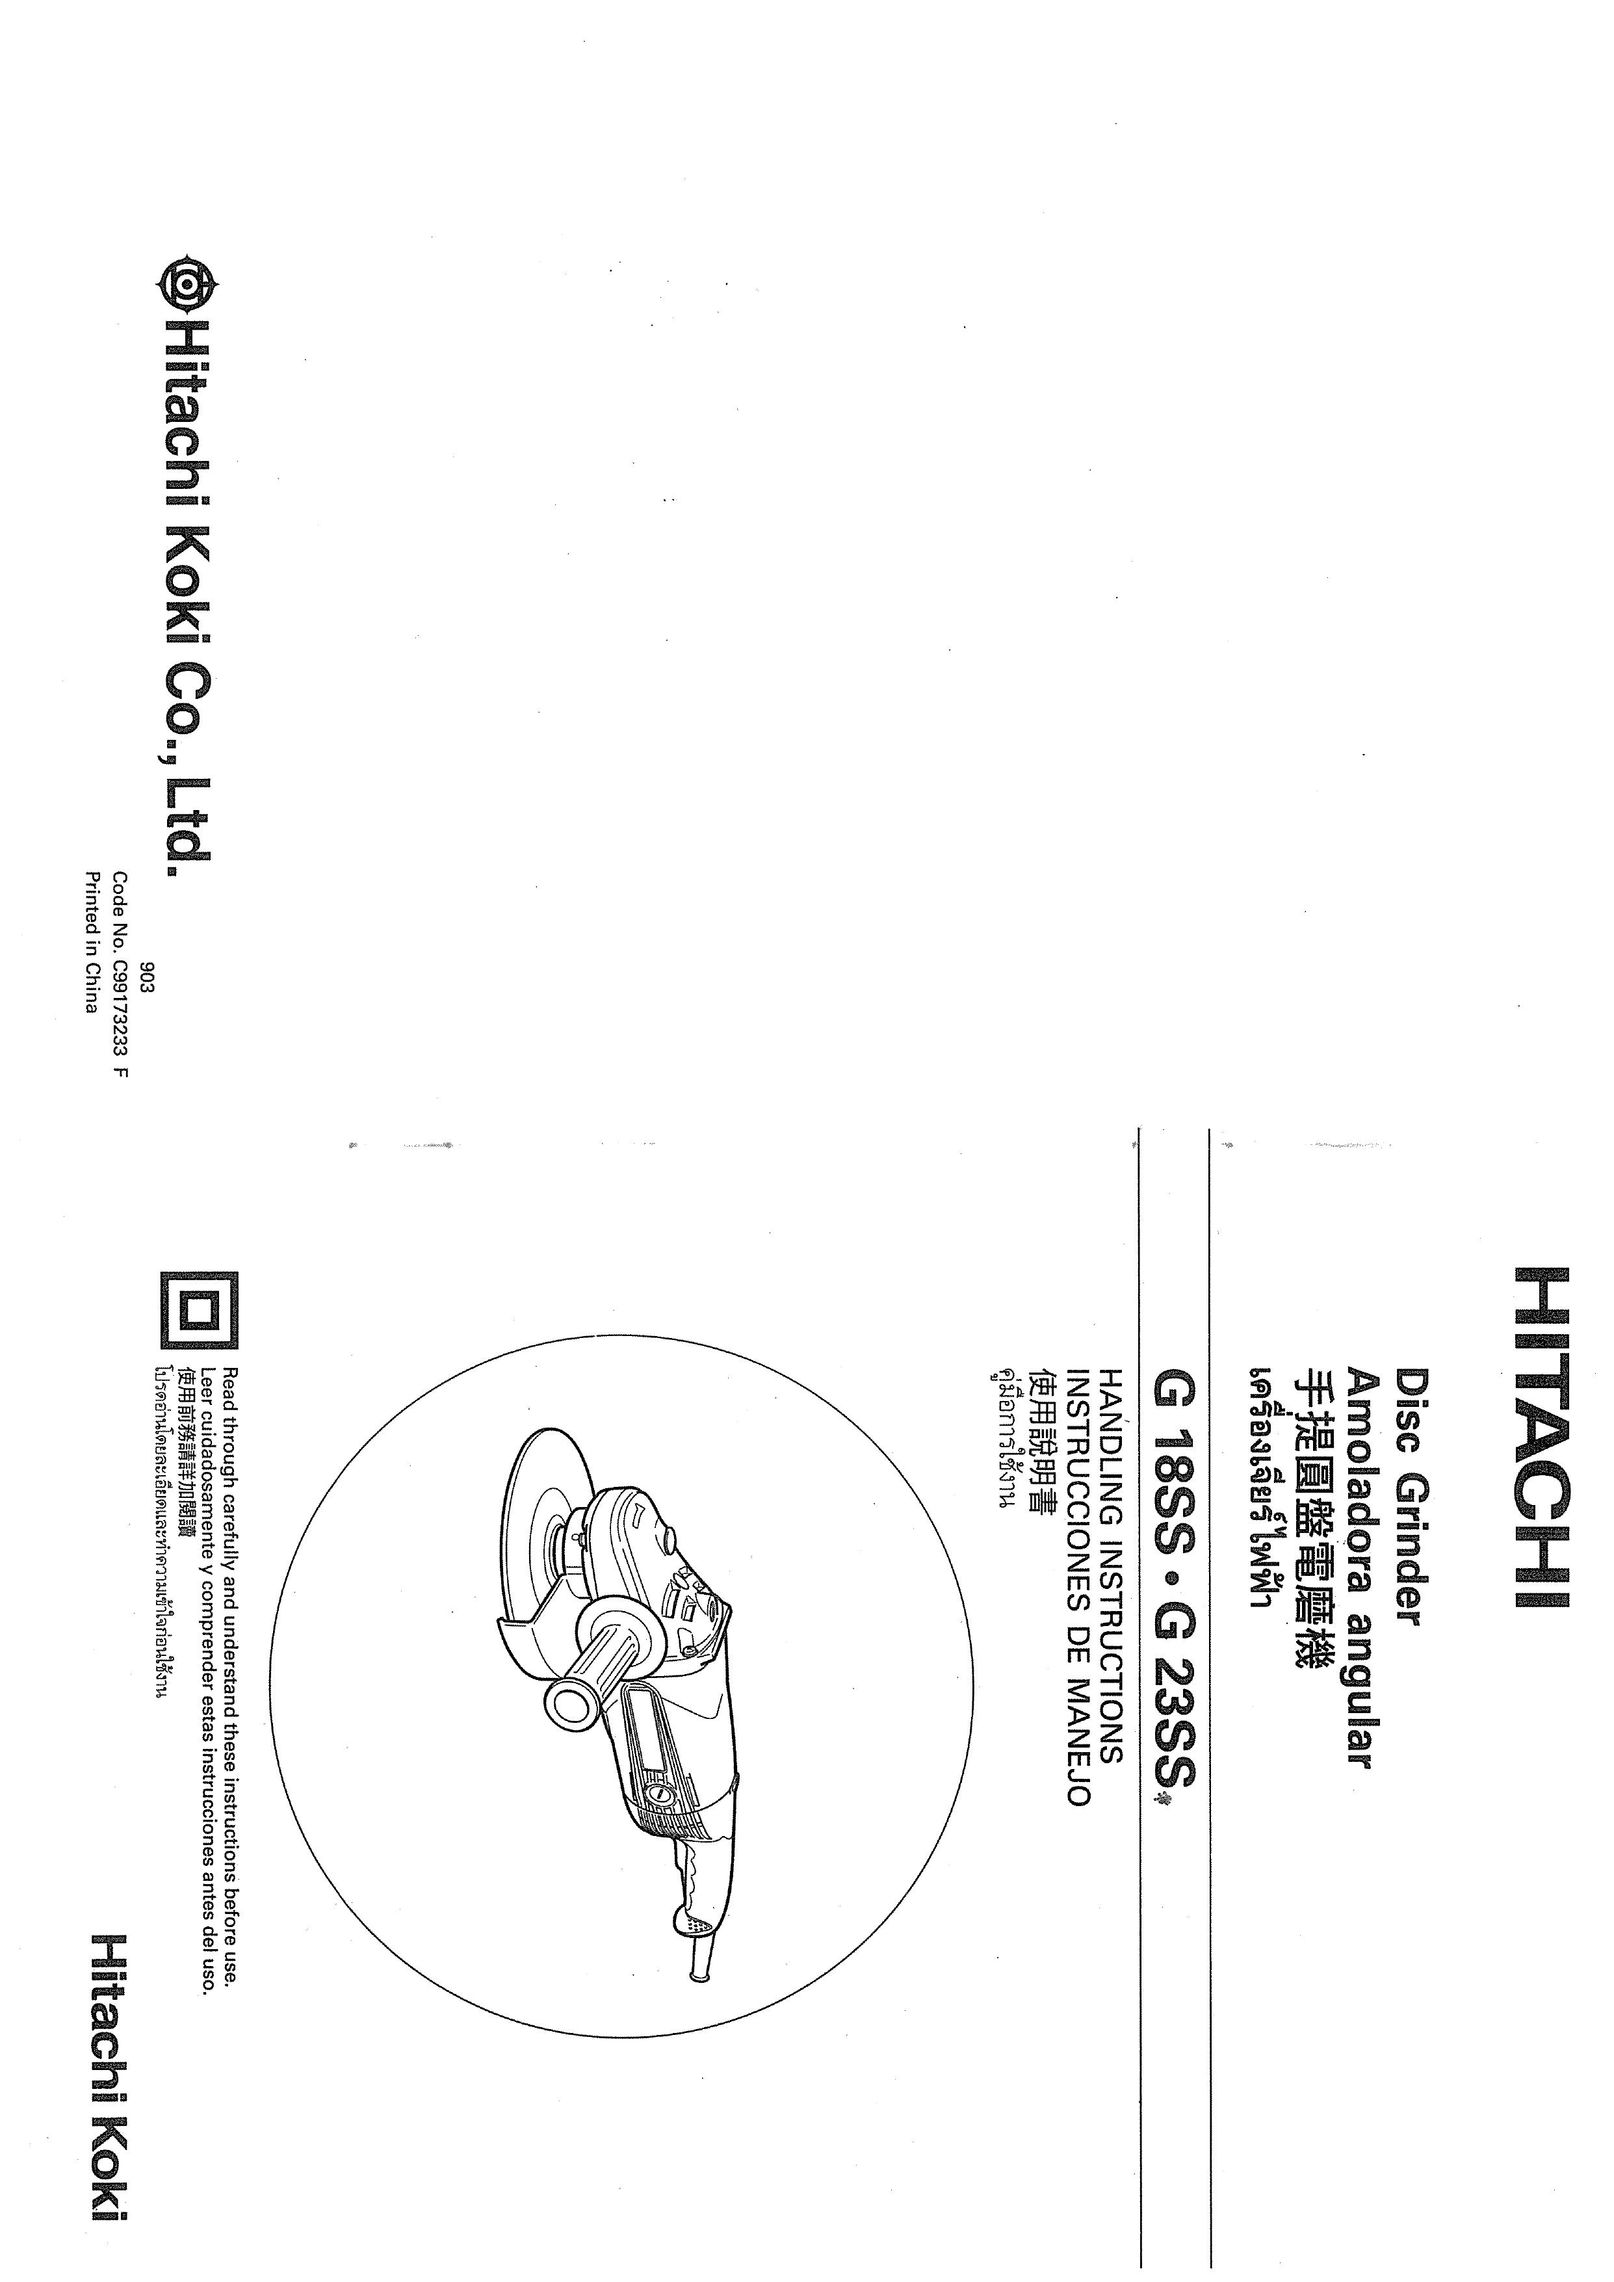 Hitachi G 18SS Grinder User Manual